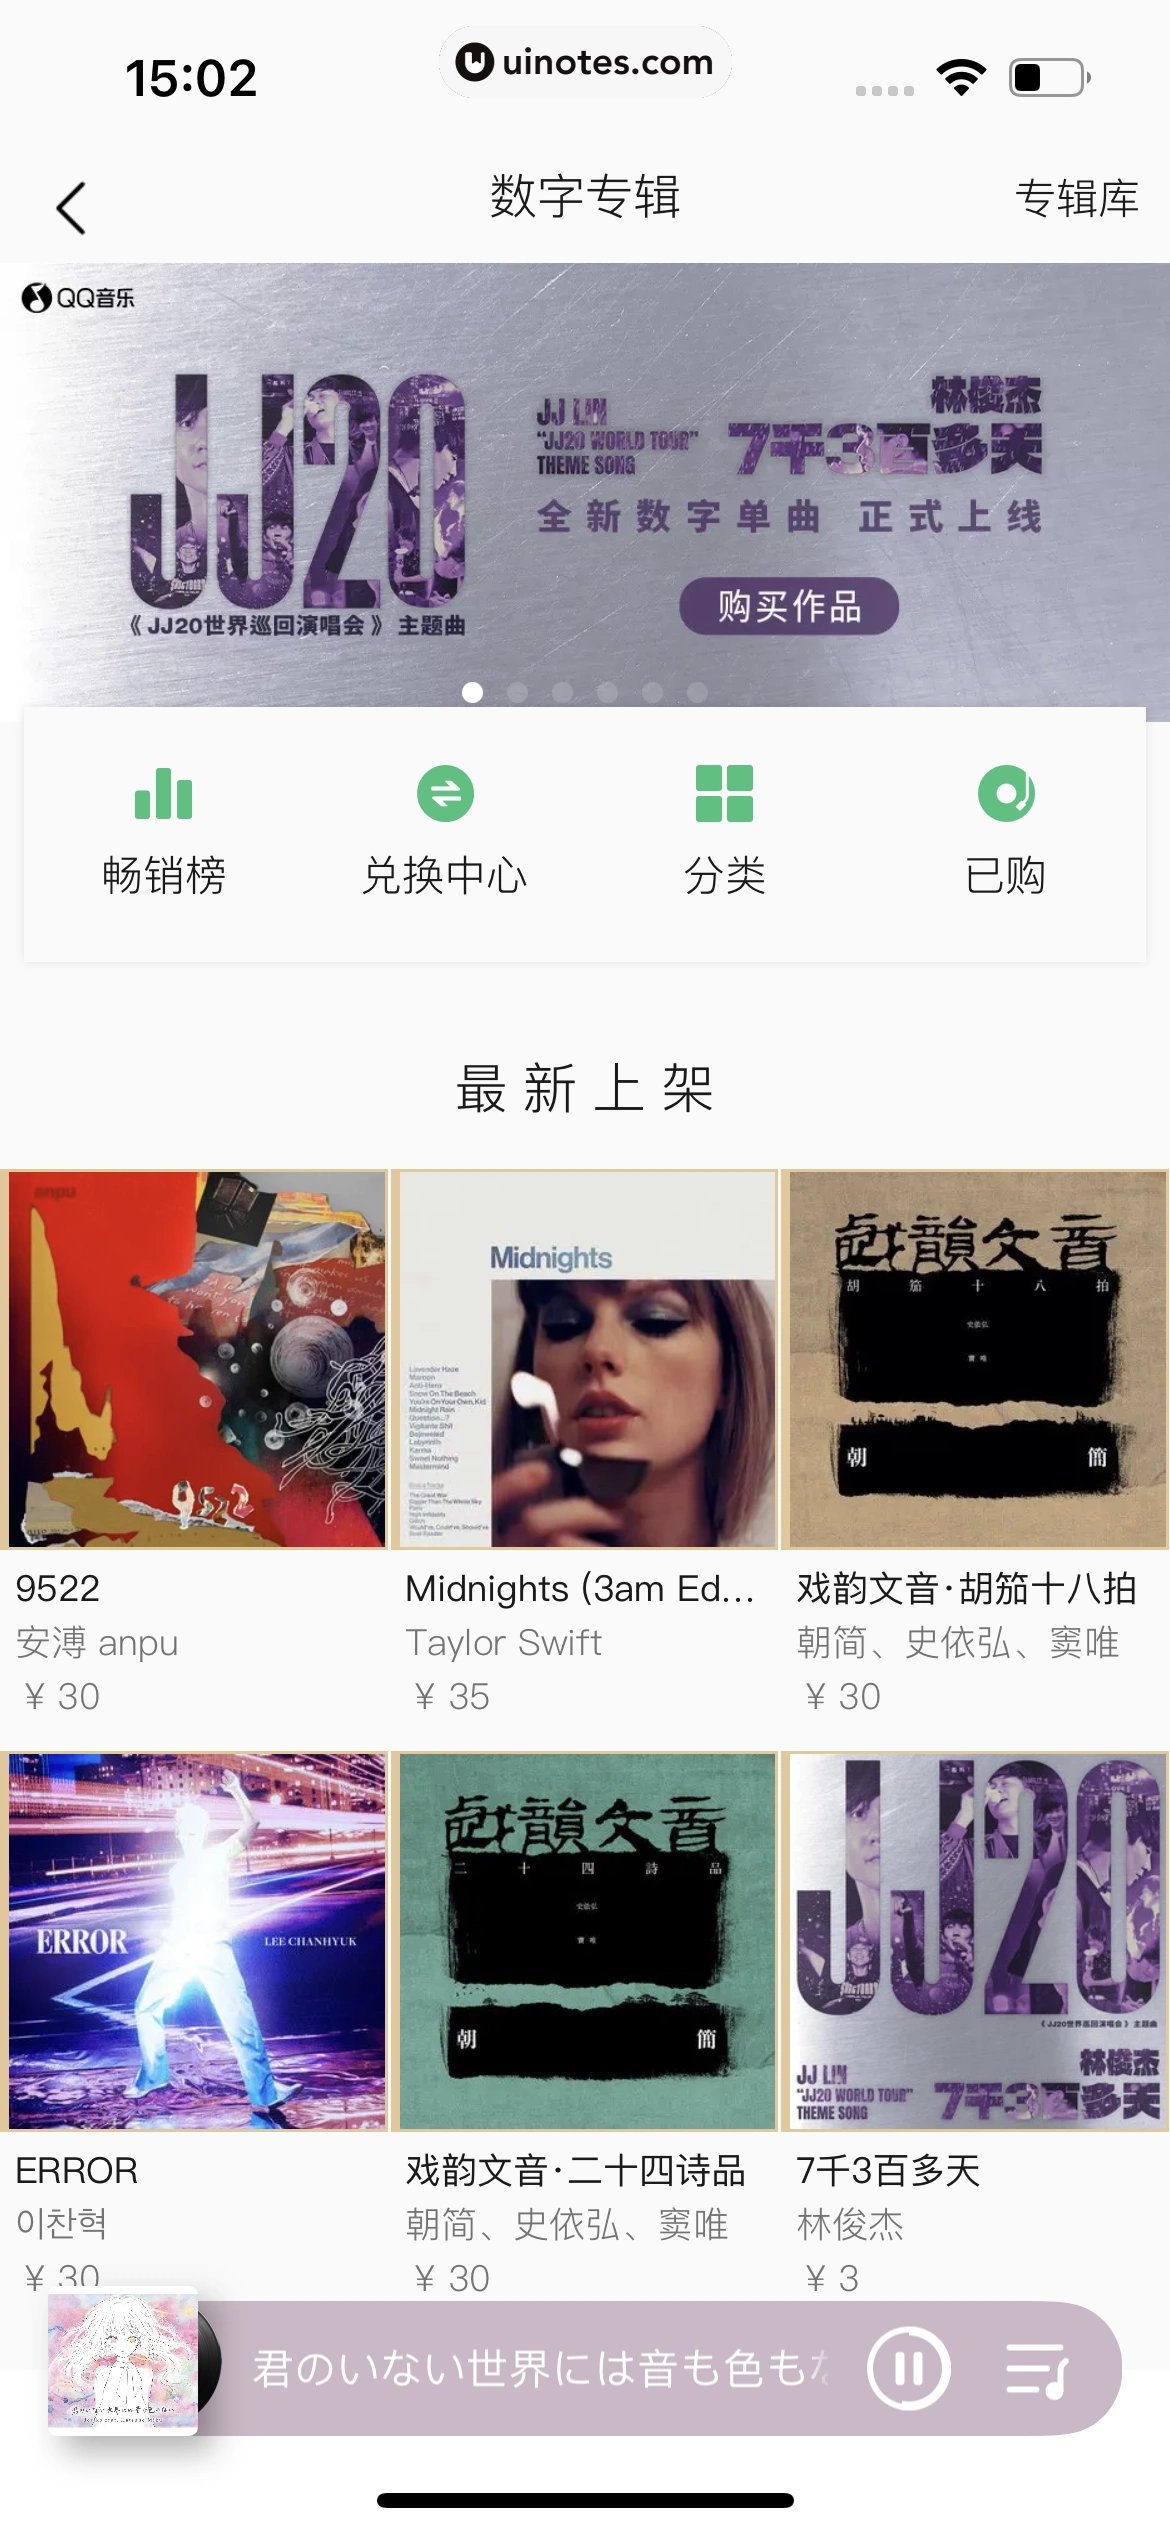 QQ音乐 App 截图 288 - UI Notes